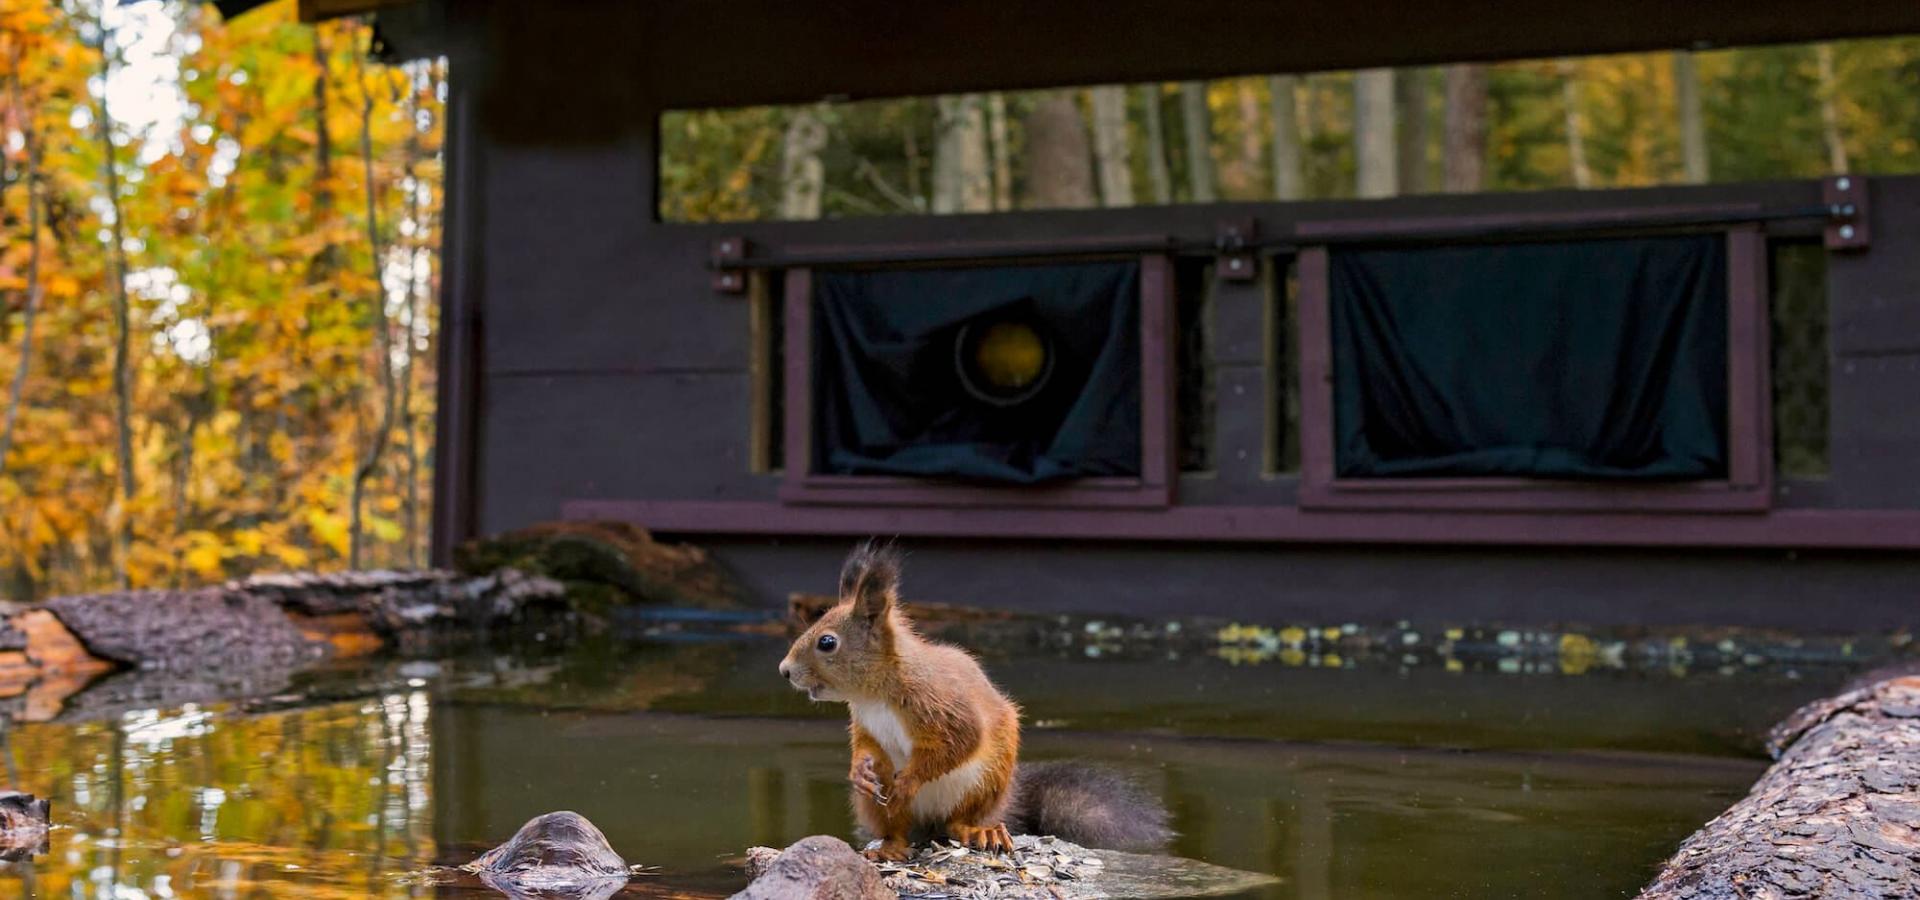 En ekorre sitter på en sten i en liten damm framför ett fotogömsle